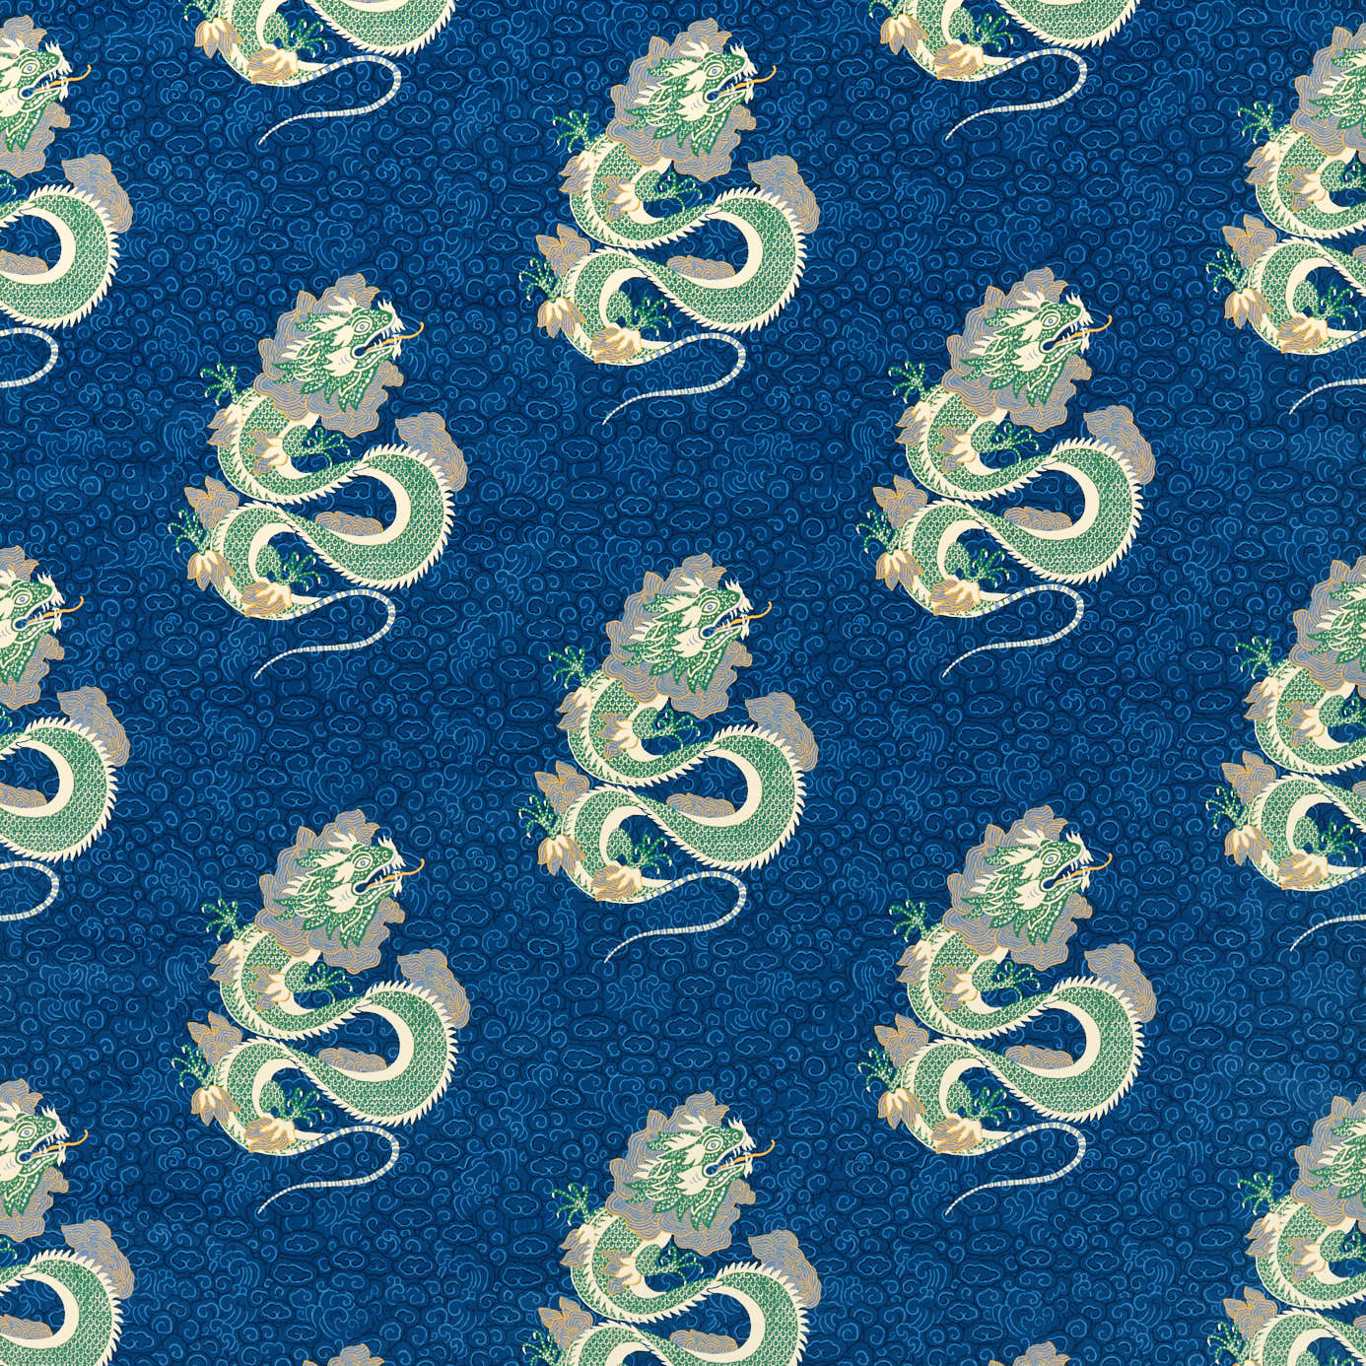 Water Dragon Emperor Blue/Emerald Fabric by SAN